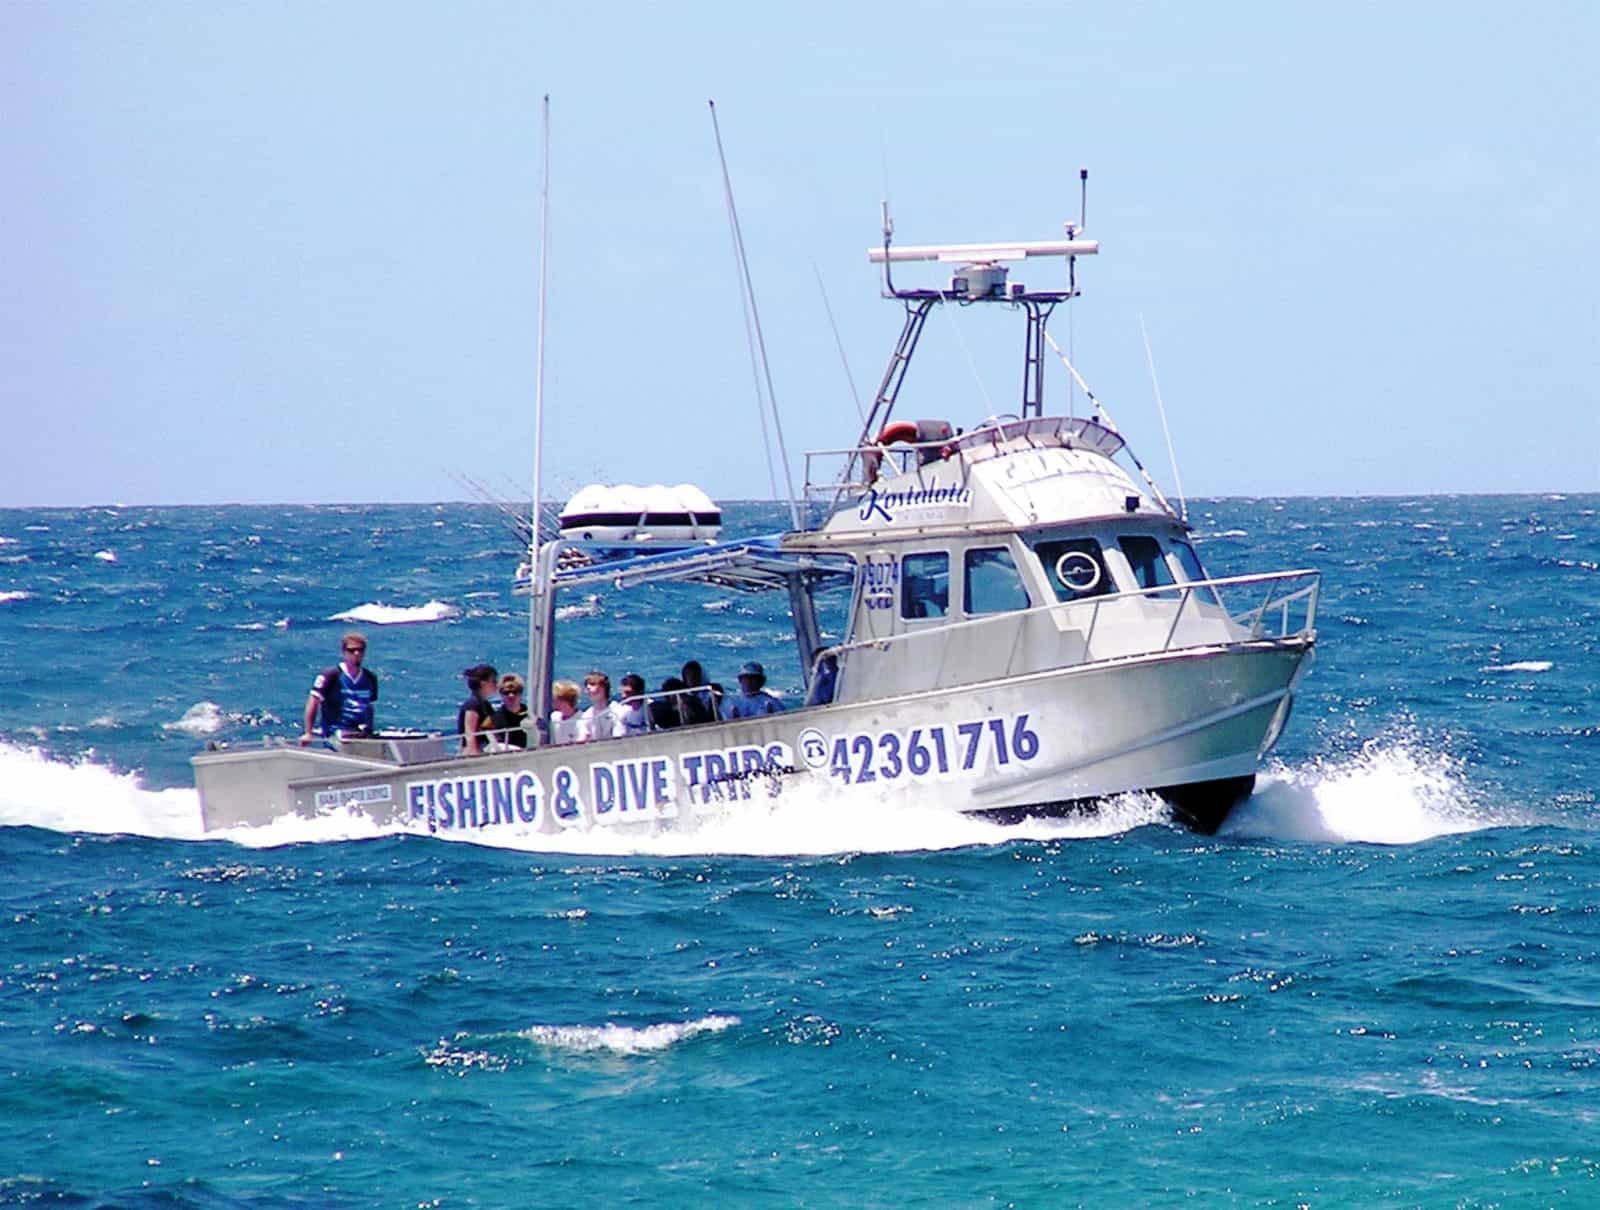 Fishing charters aboard Kostalota from Kiama